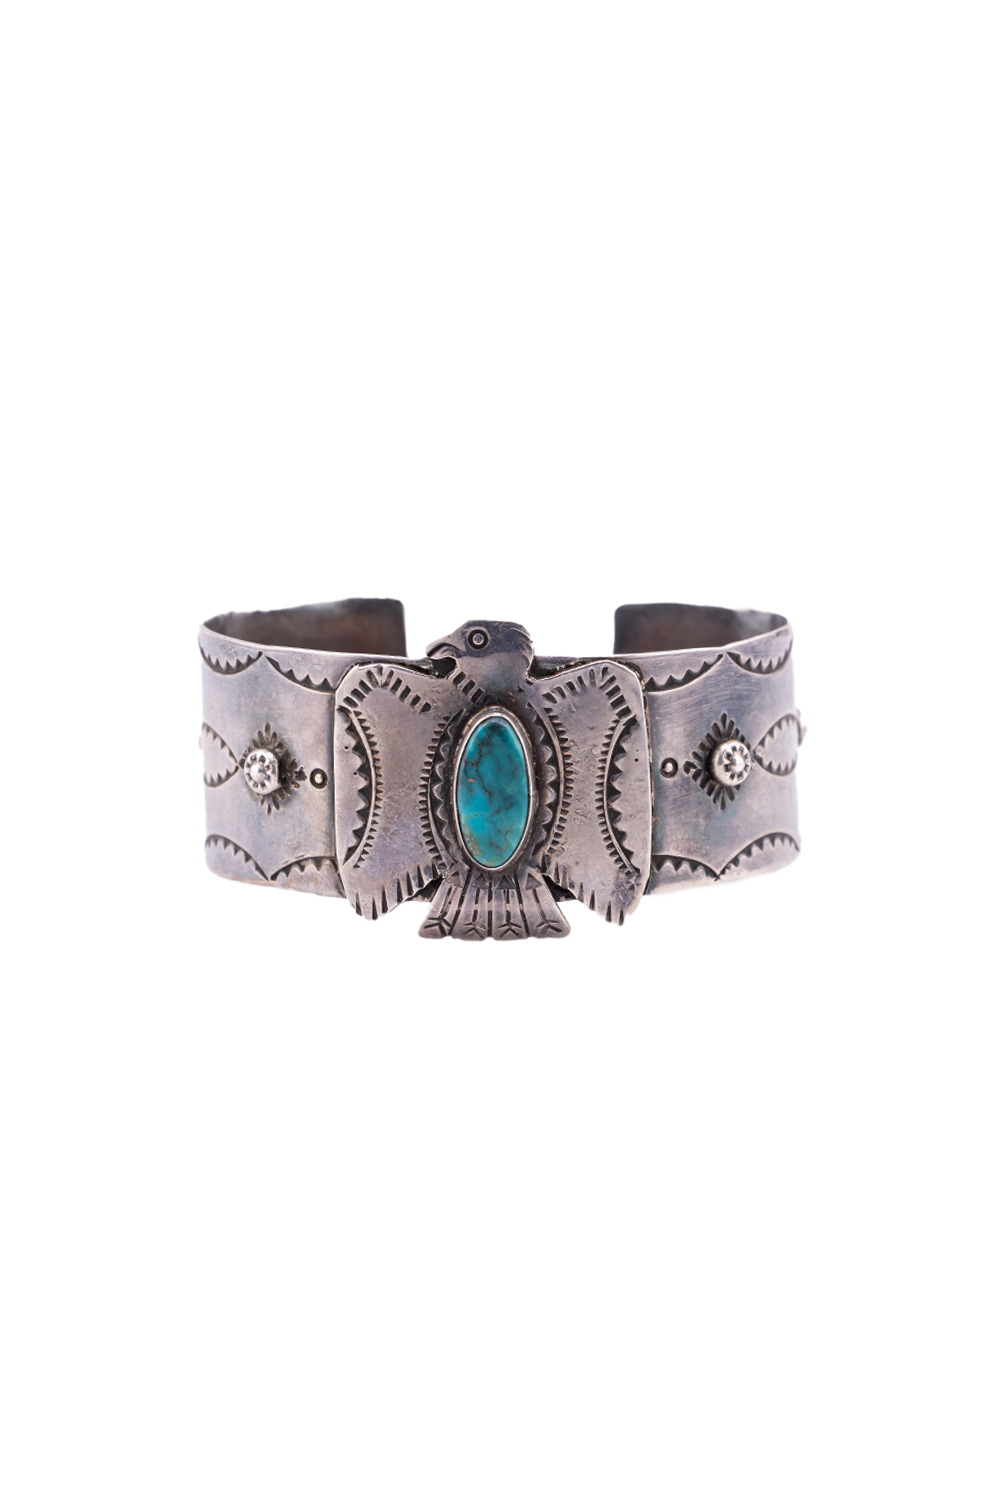 Old Navajo Turquoise Sterling Thunderbird Bracelet